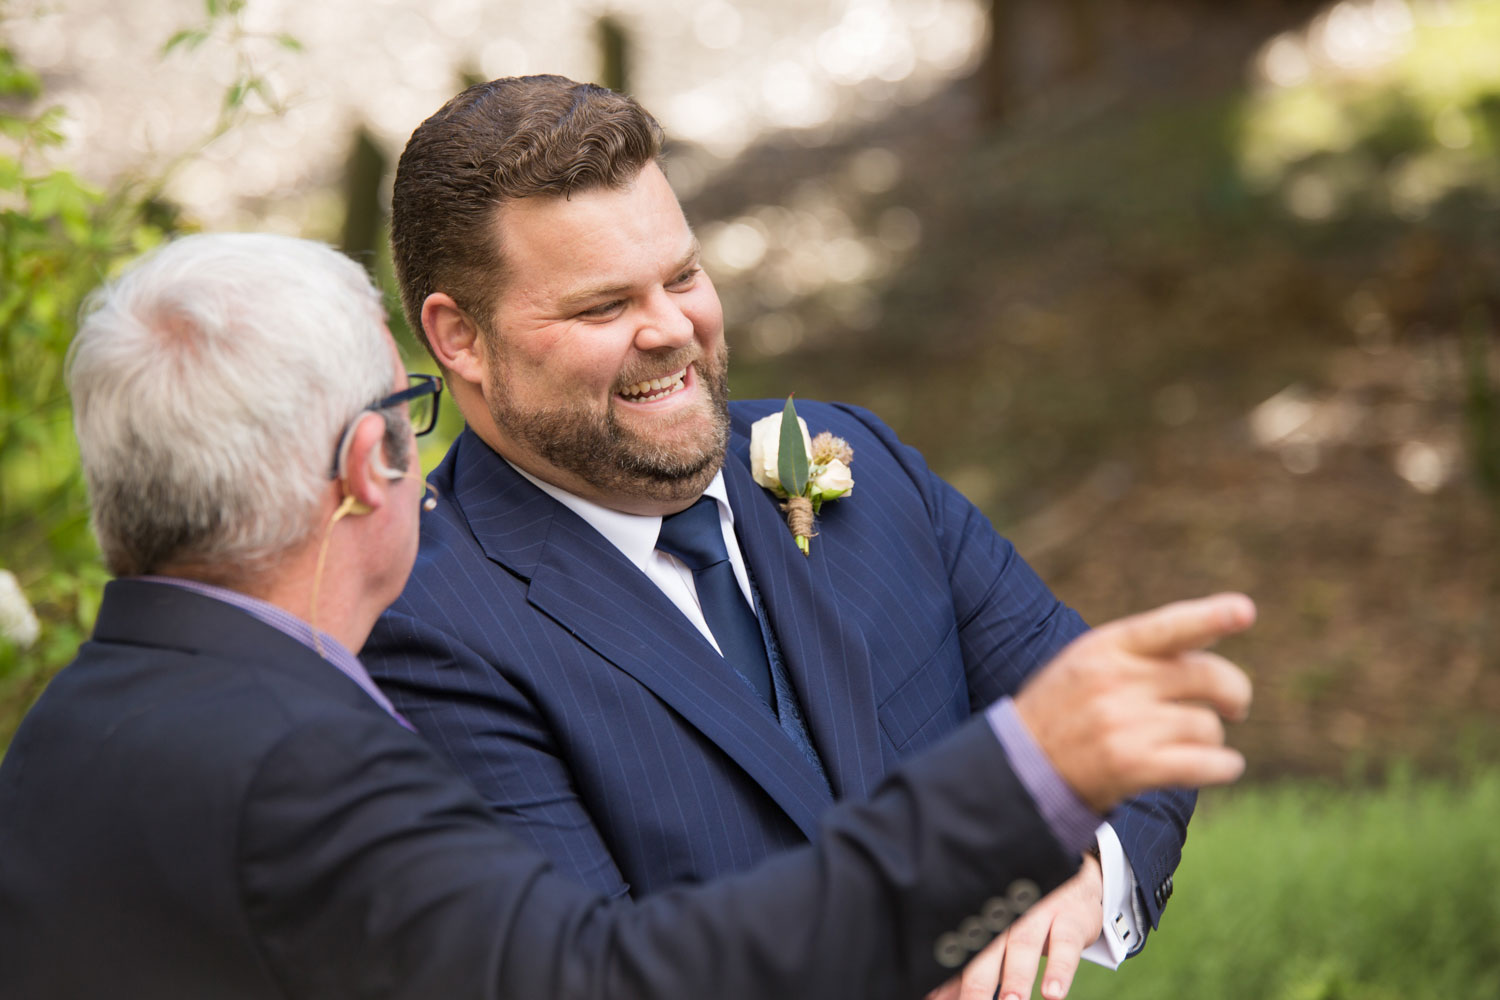 wedding photographer auckland groom talking to celebrant